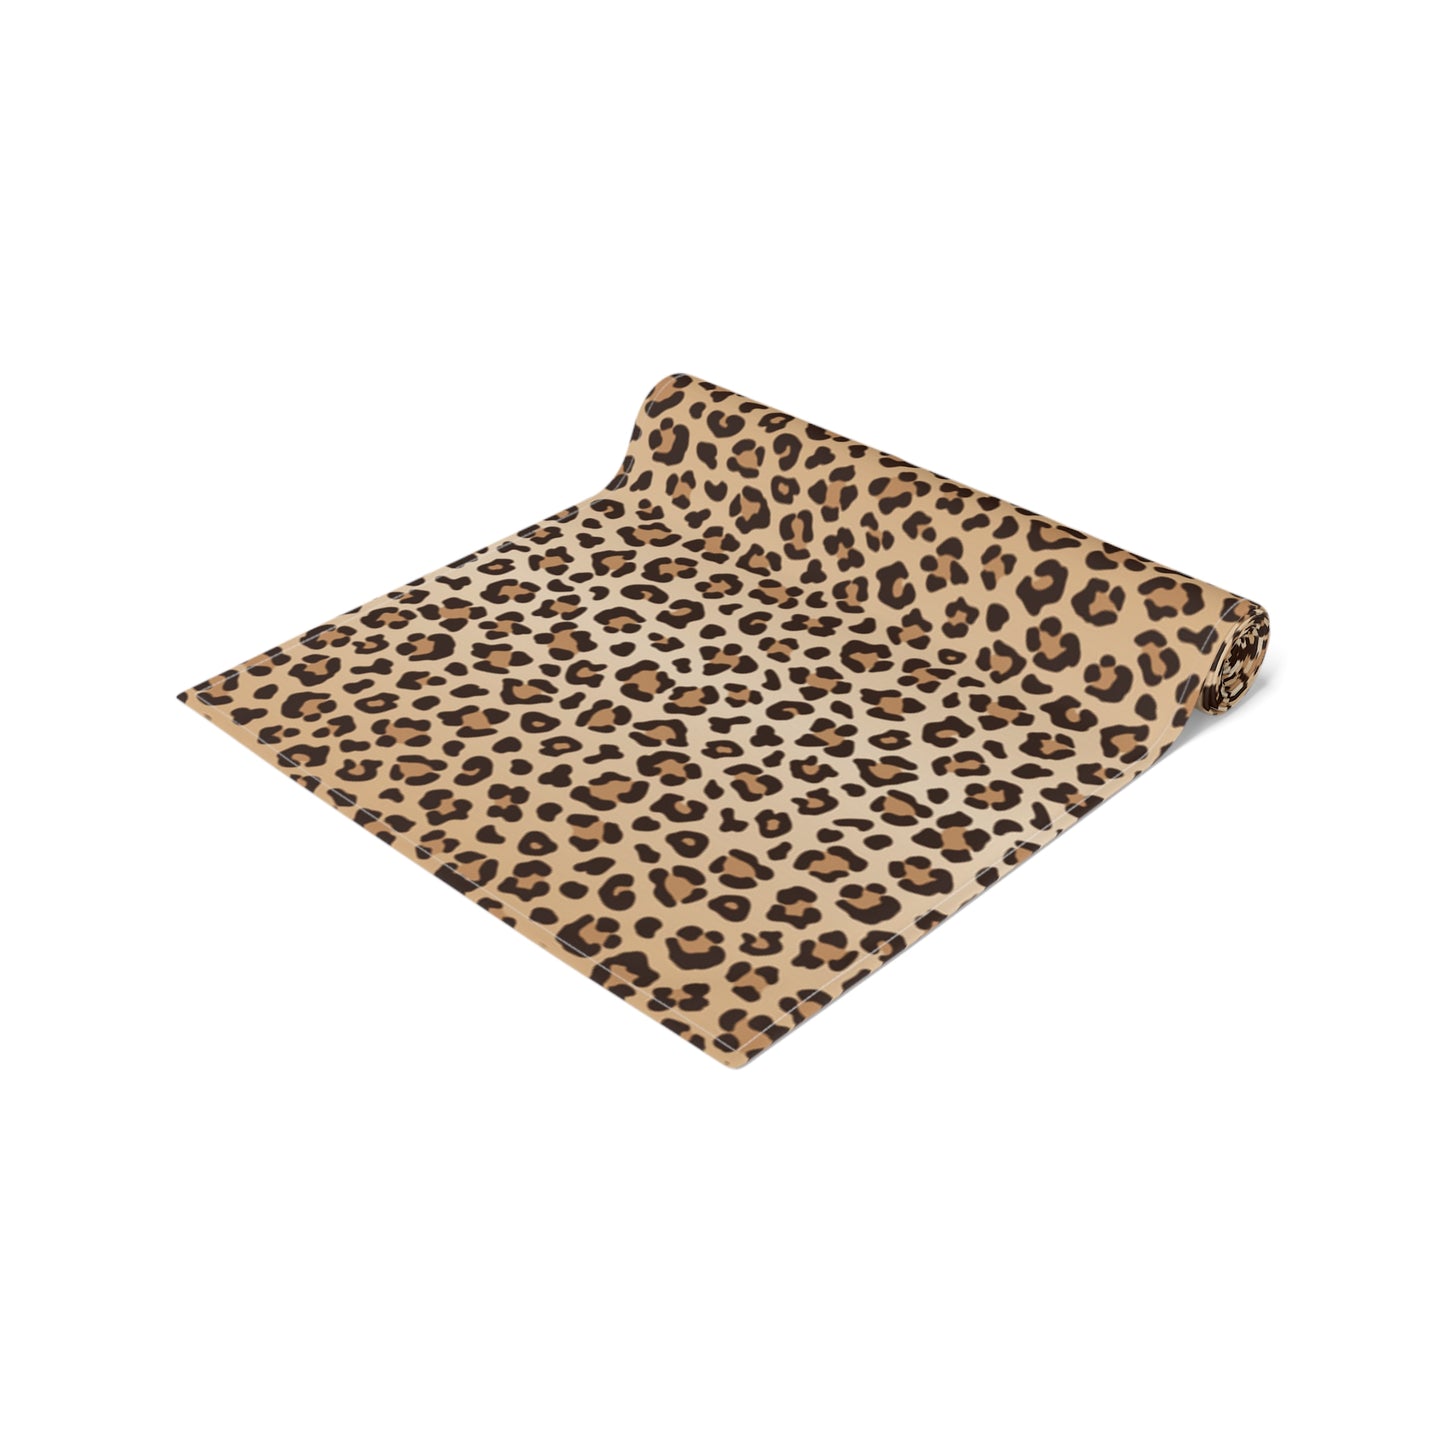 Leopard Print Table Runner / Leopard Print Decor